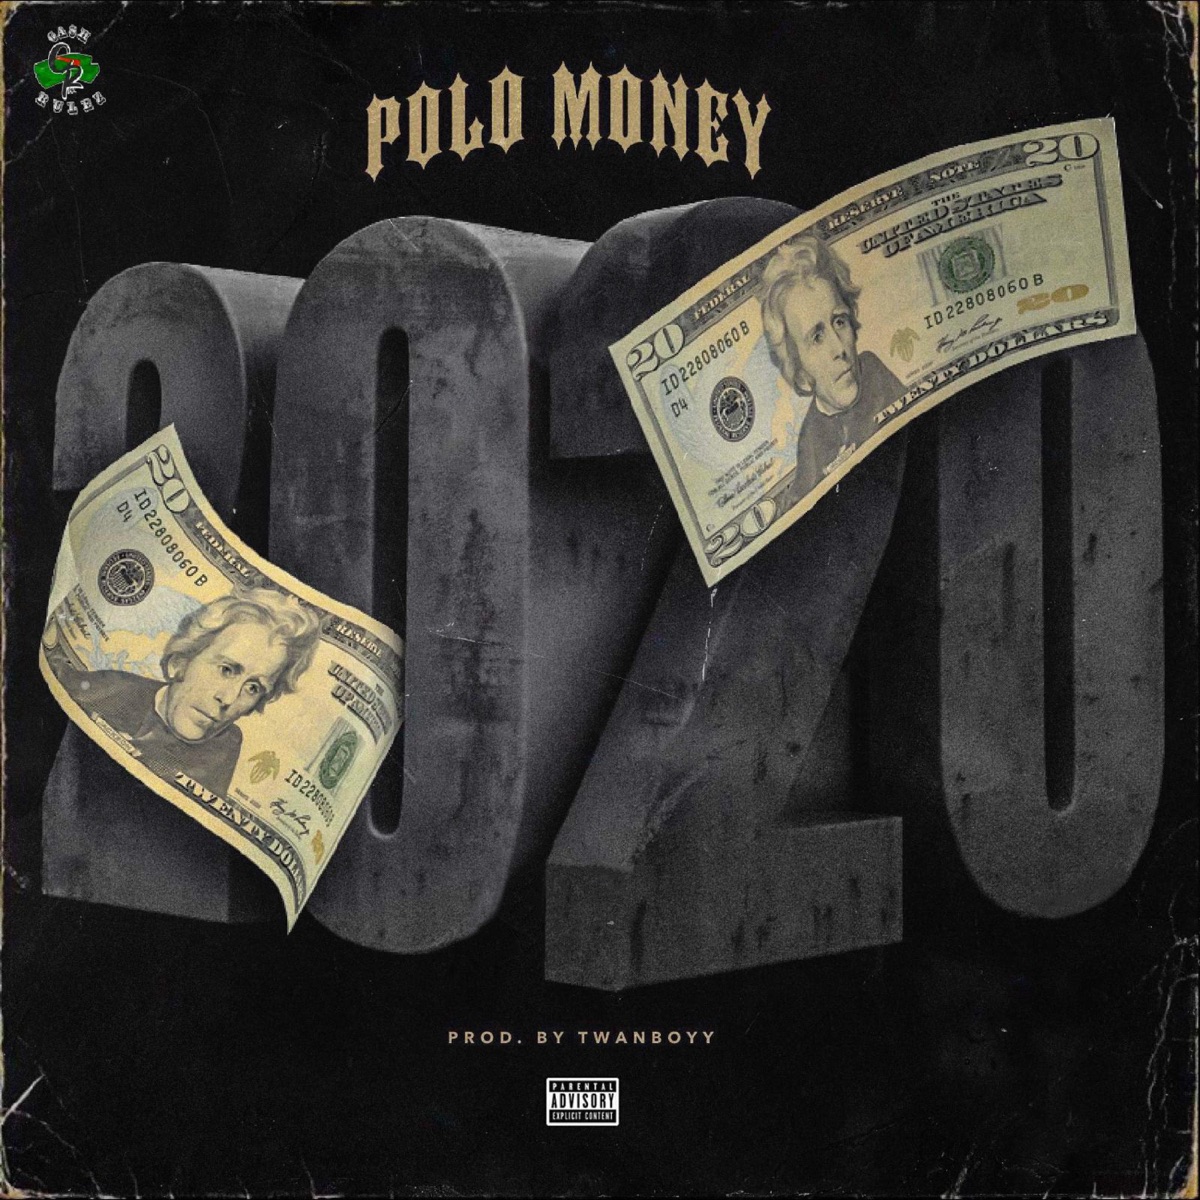 2020 - Single - Album by Polo Money - Apple Music